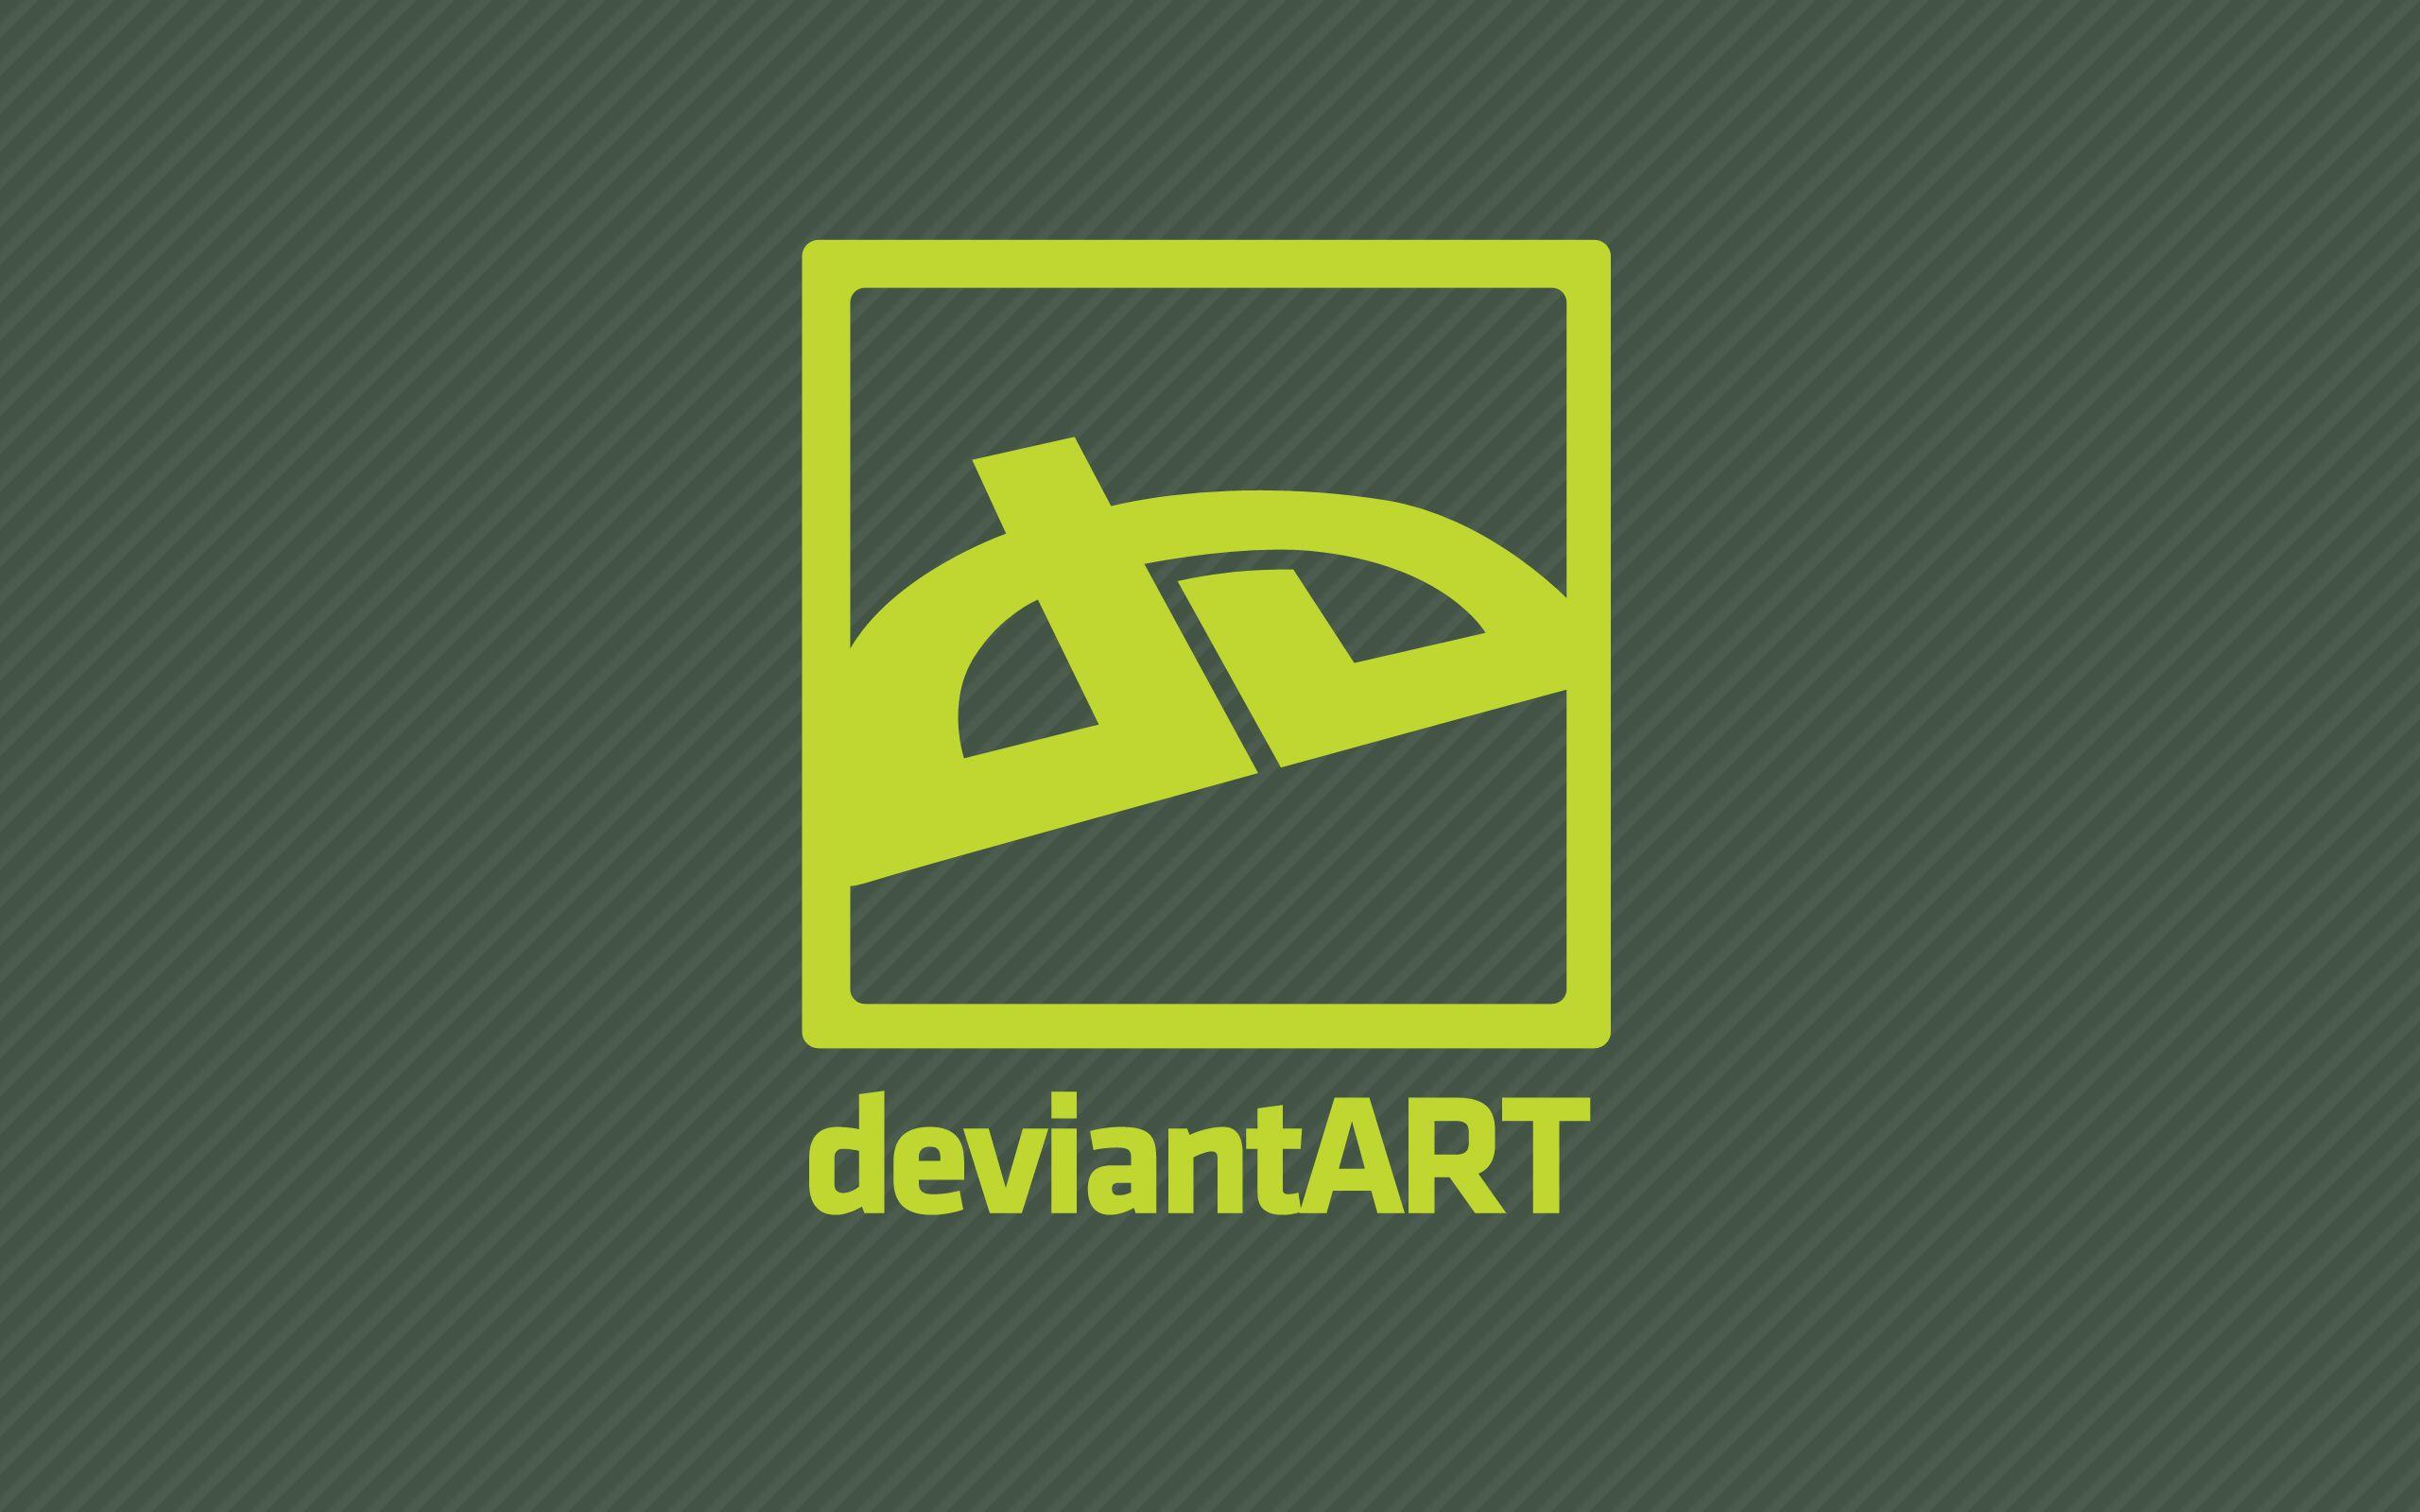 deviantART Logo - New style dA logo wallpaper